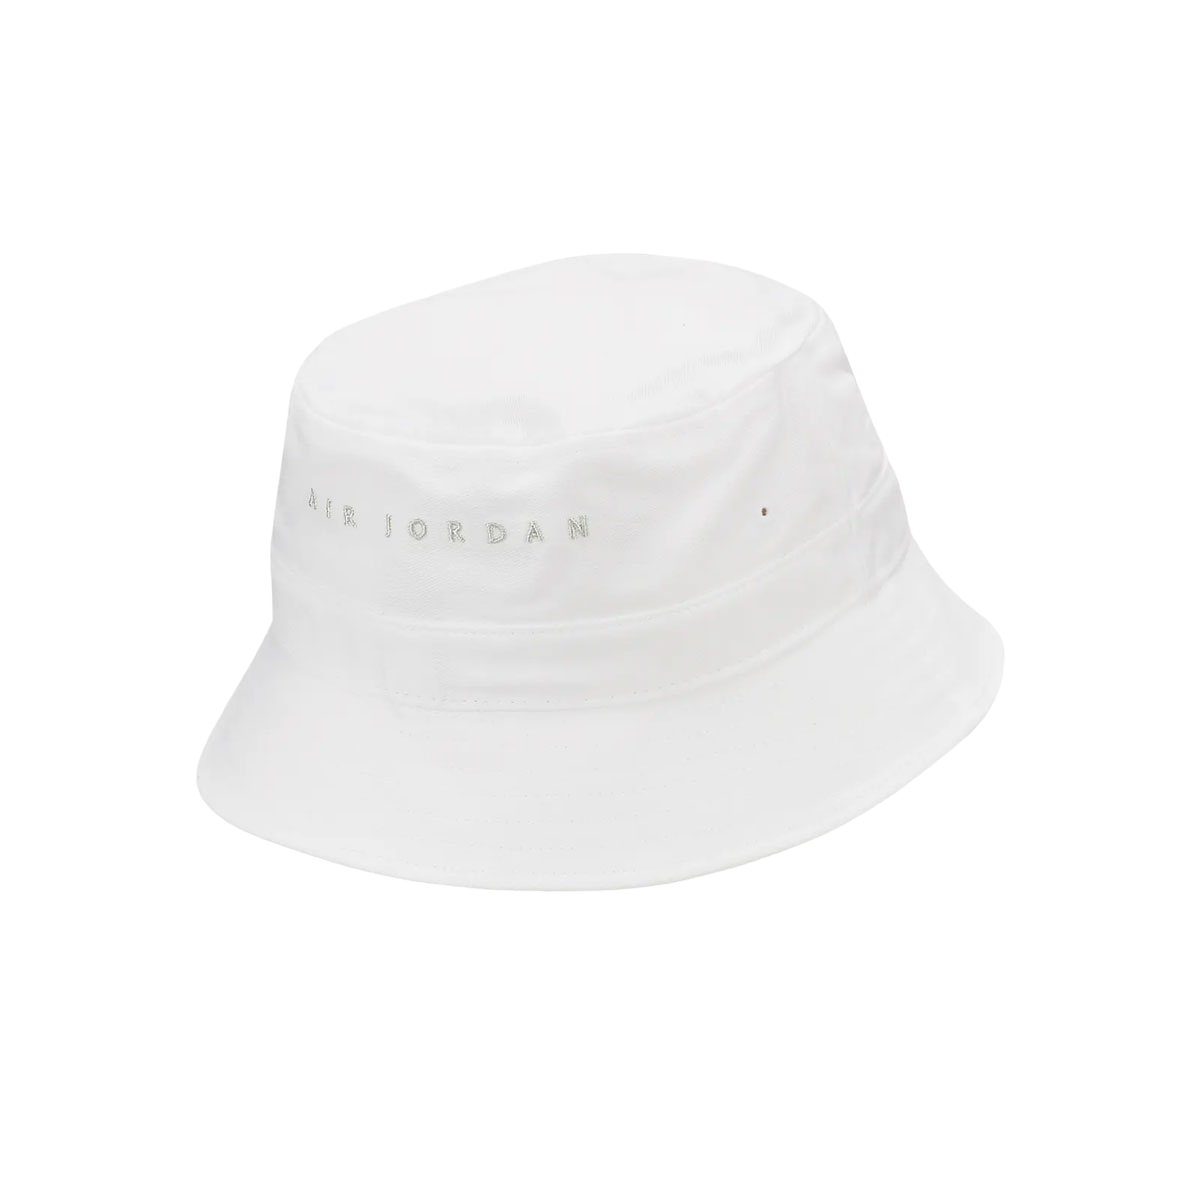 Air Jordan x Union Bucket Hat in White - KickzStore